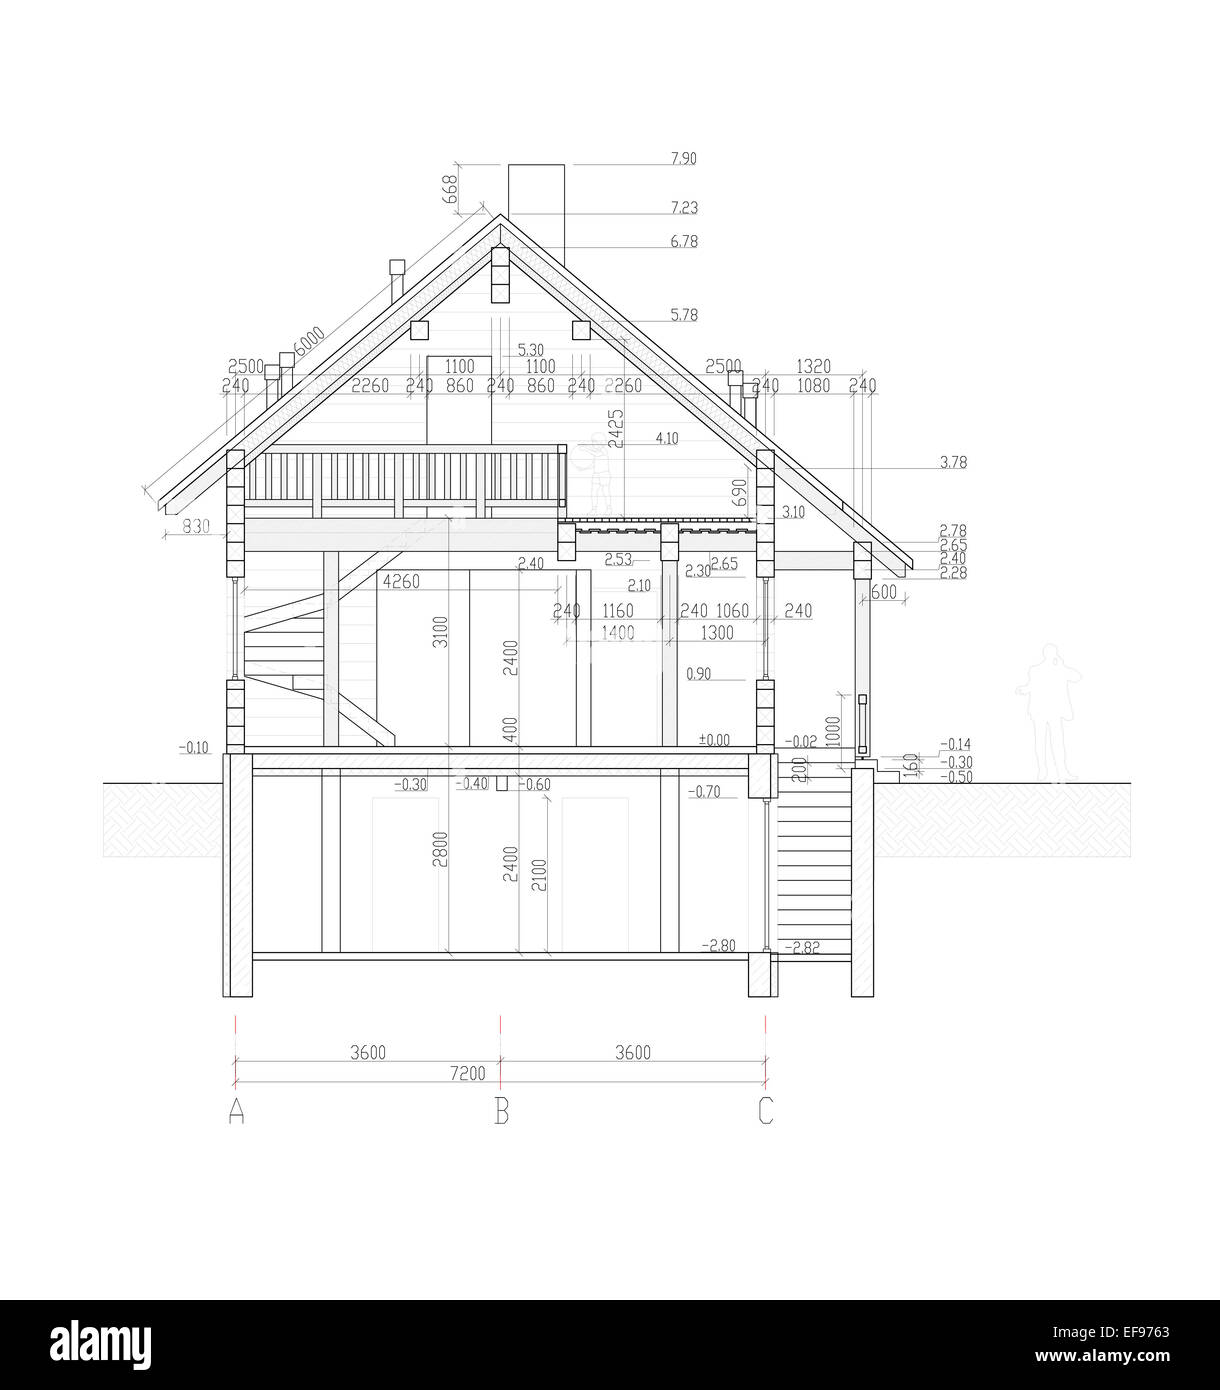 House plan / scheme /layout Stock Photo